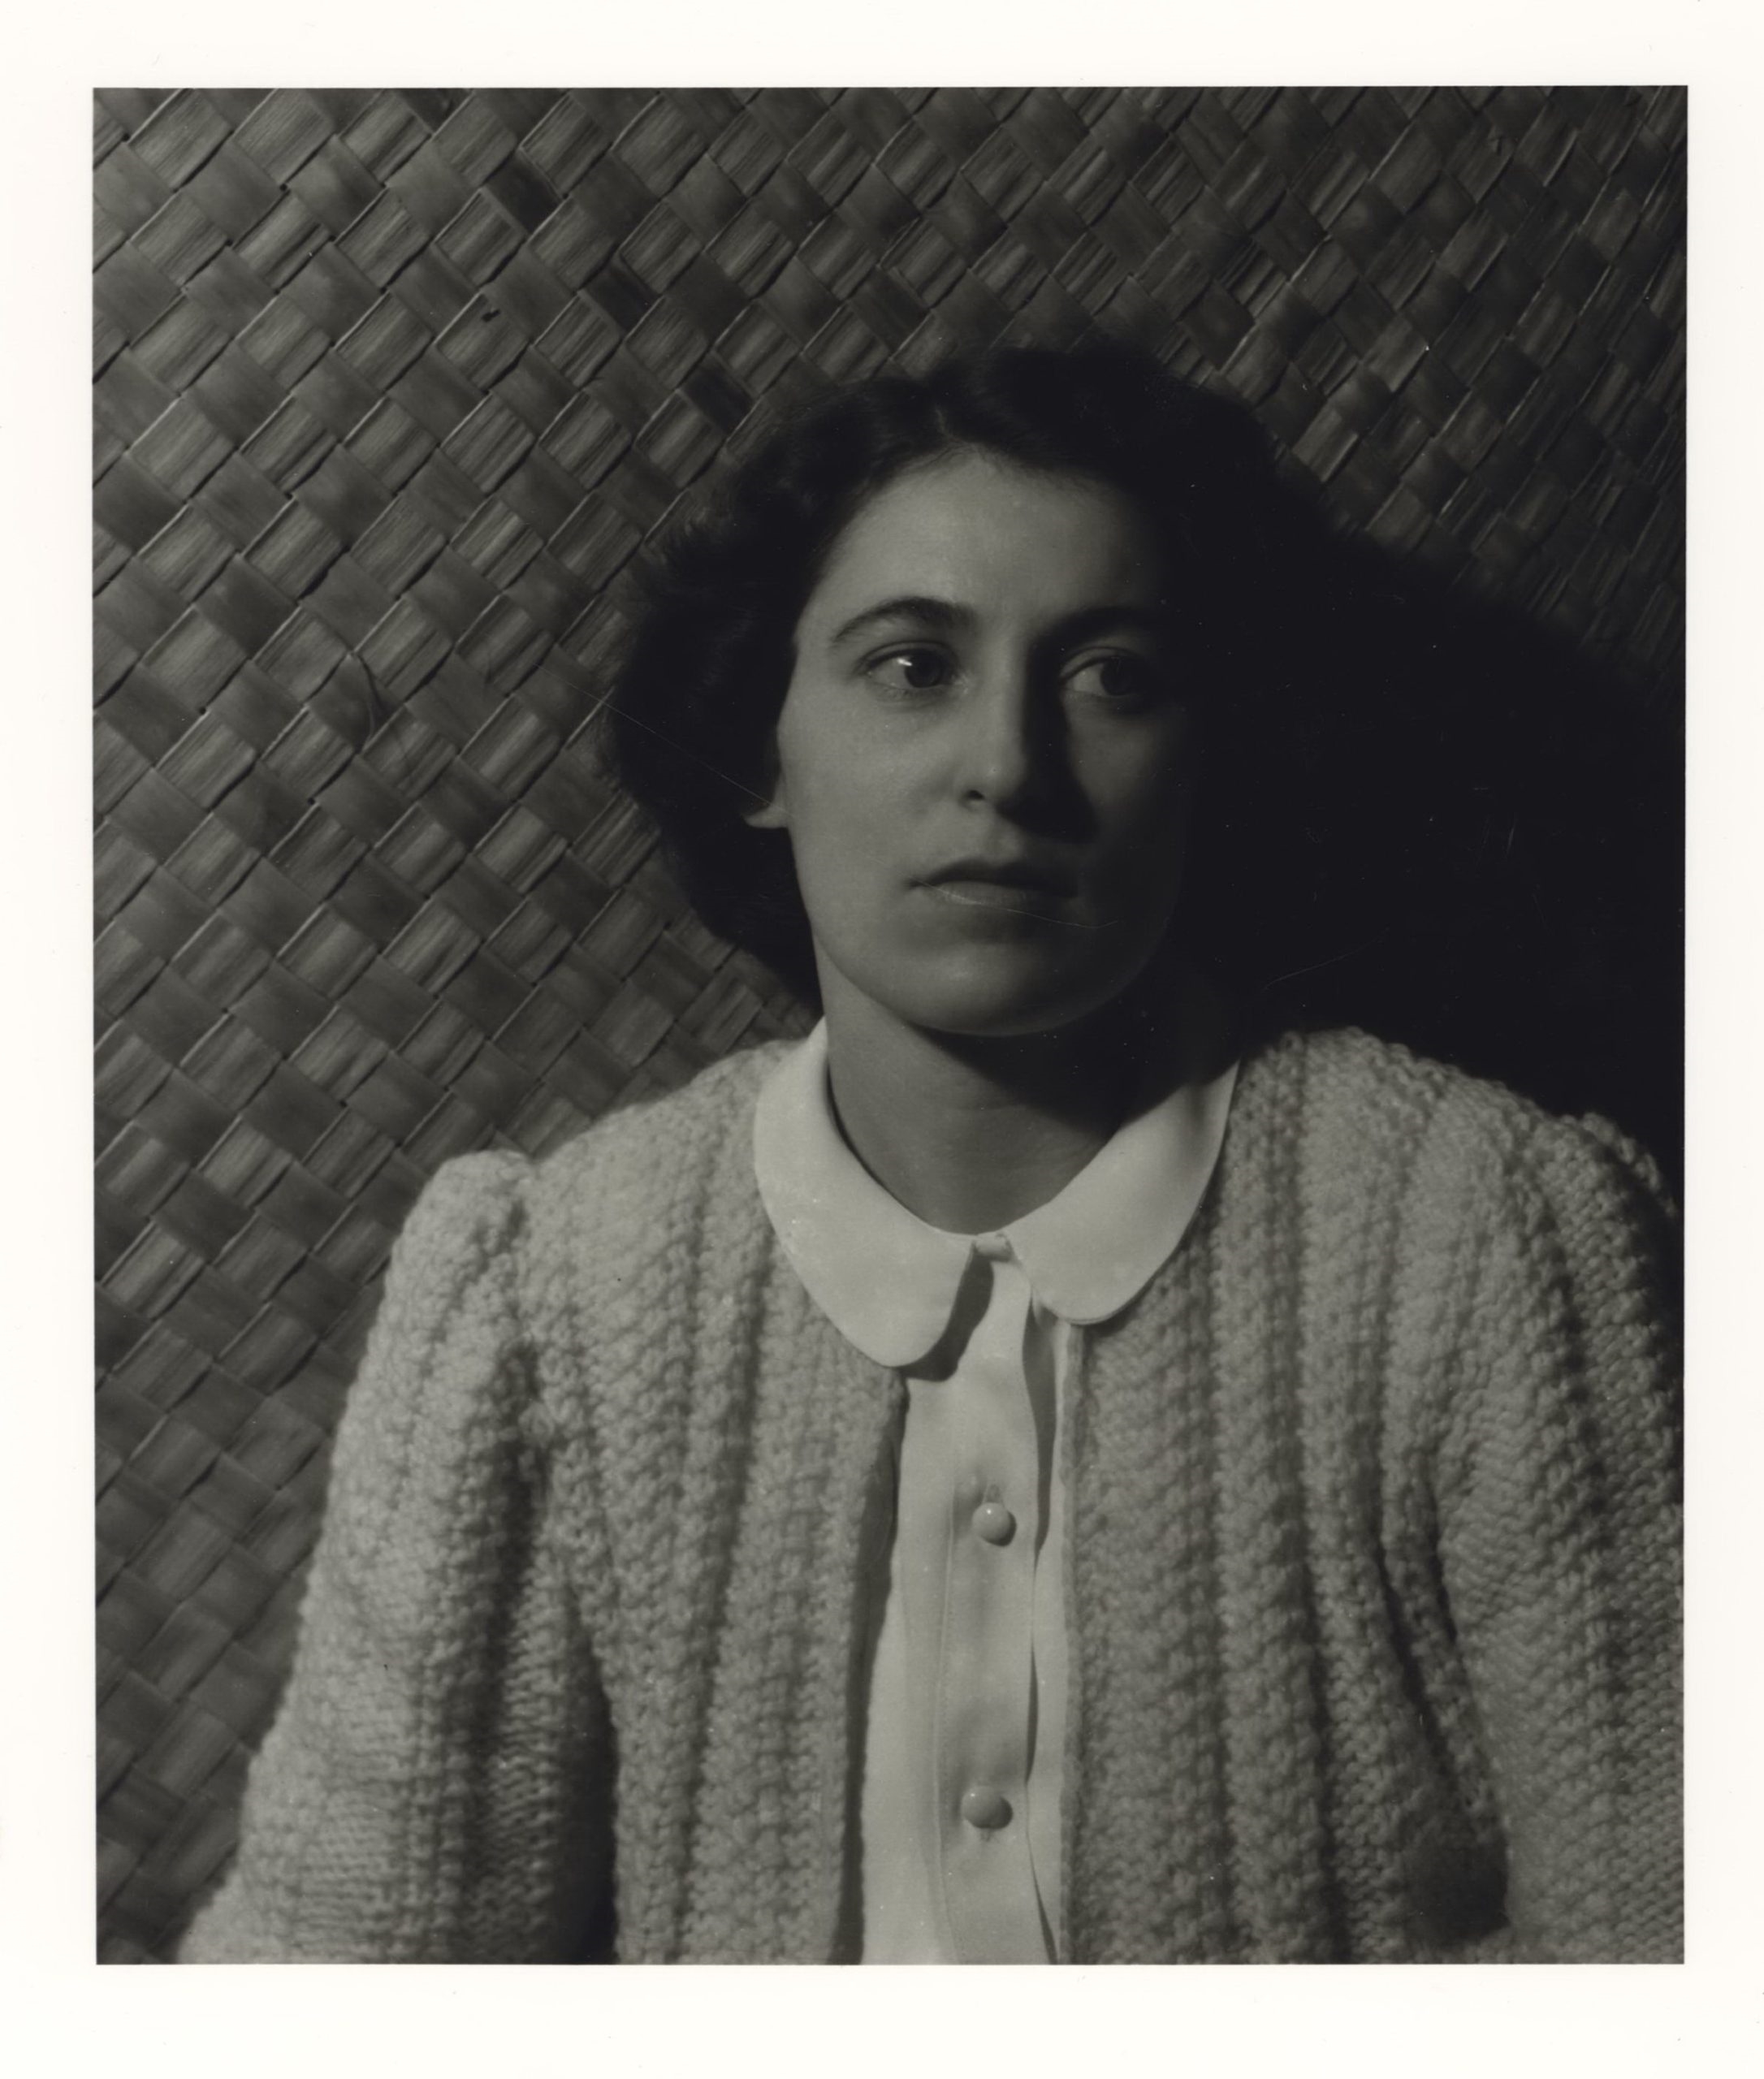 Self-portrait by Olive Cotton, 1943